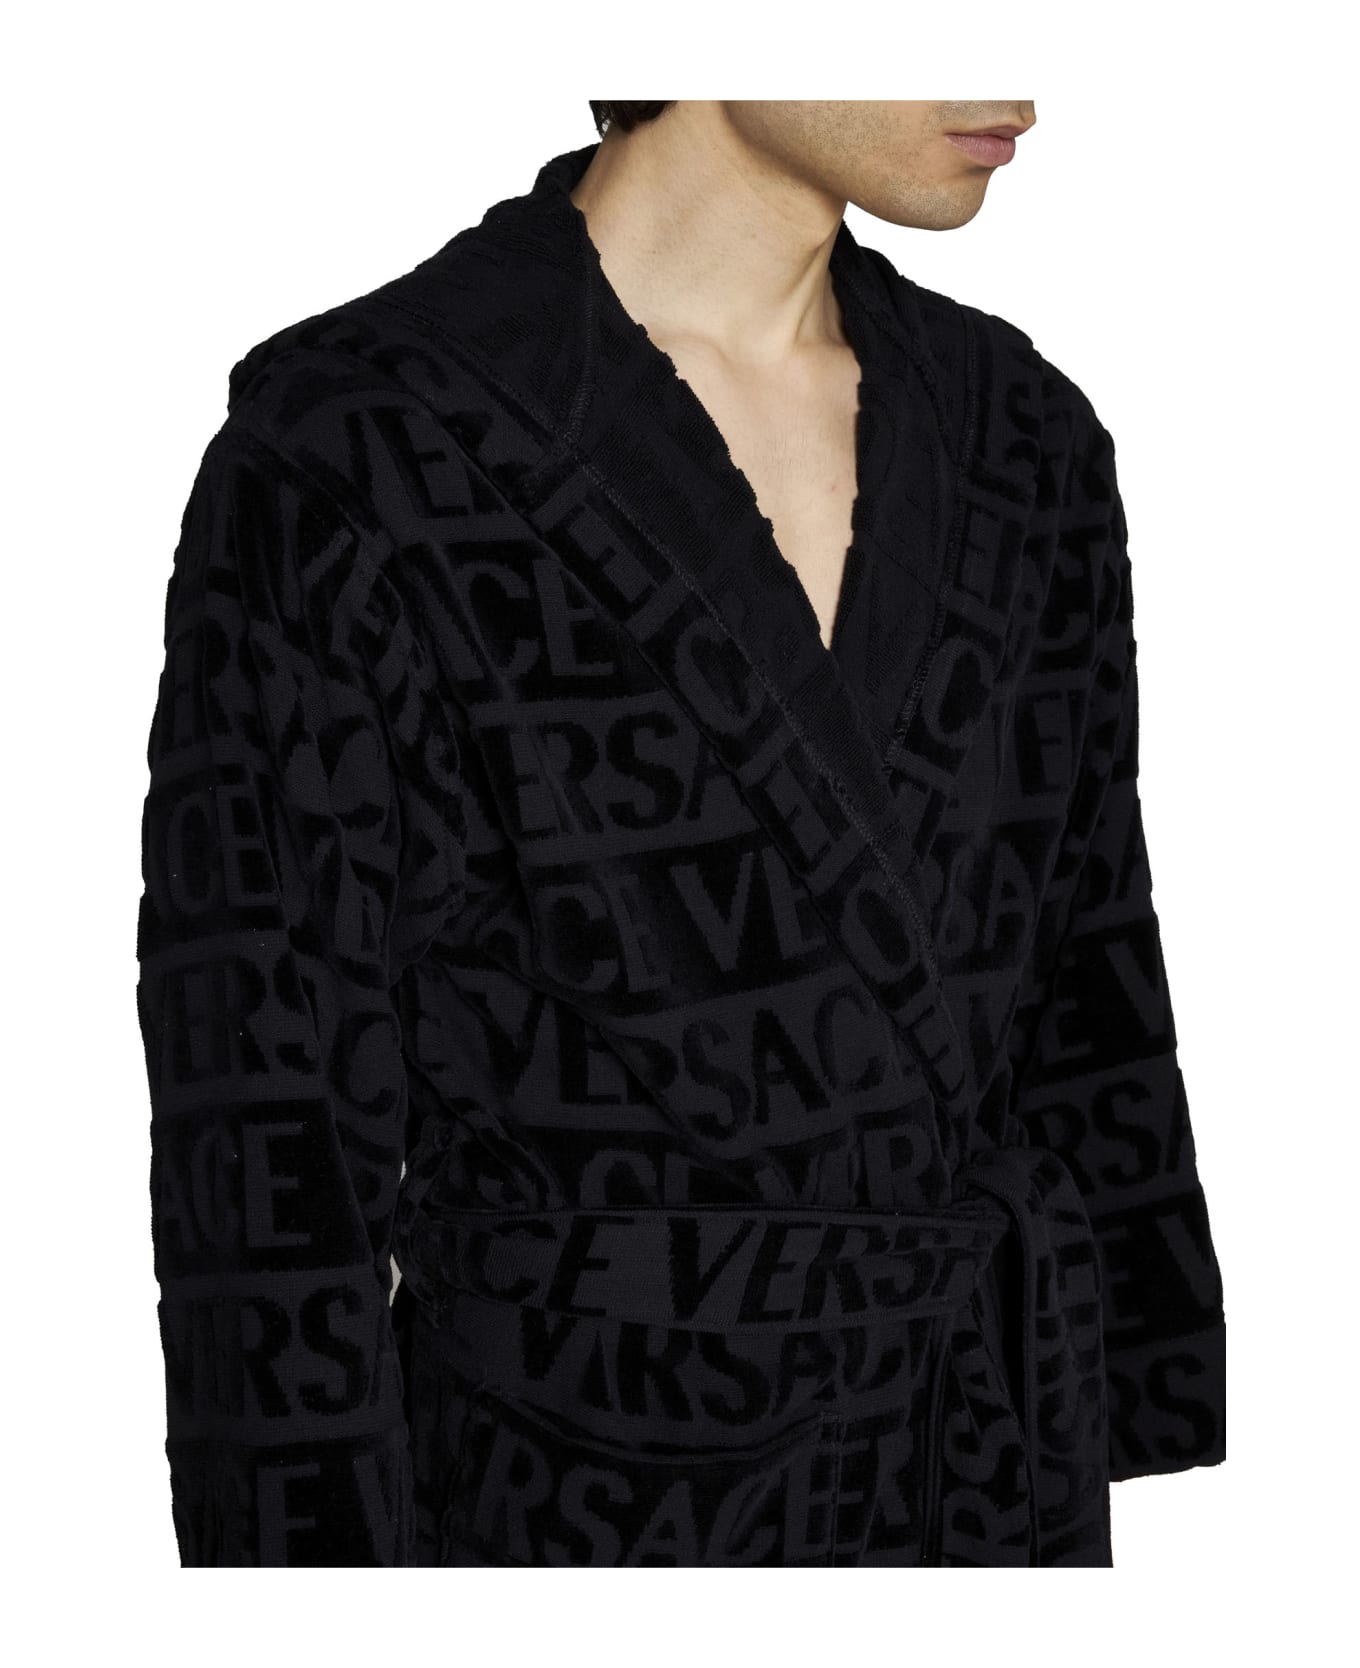 Versace Sequin Logo Bathrobe - Black ローブ